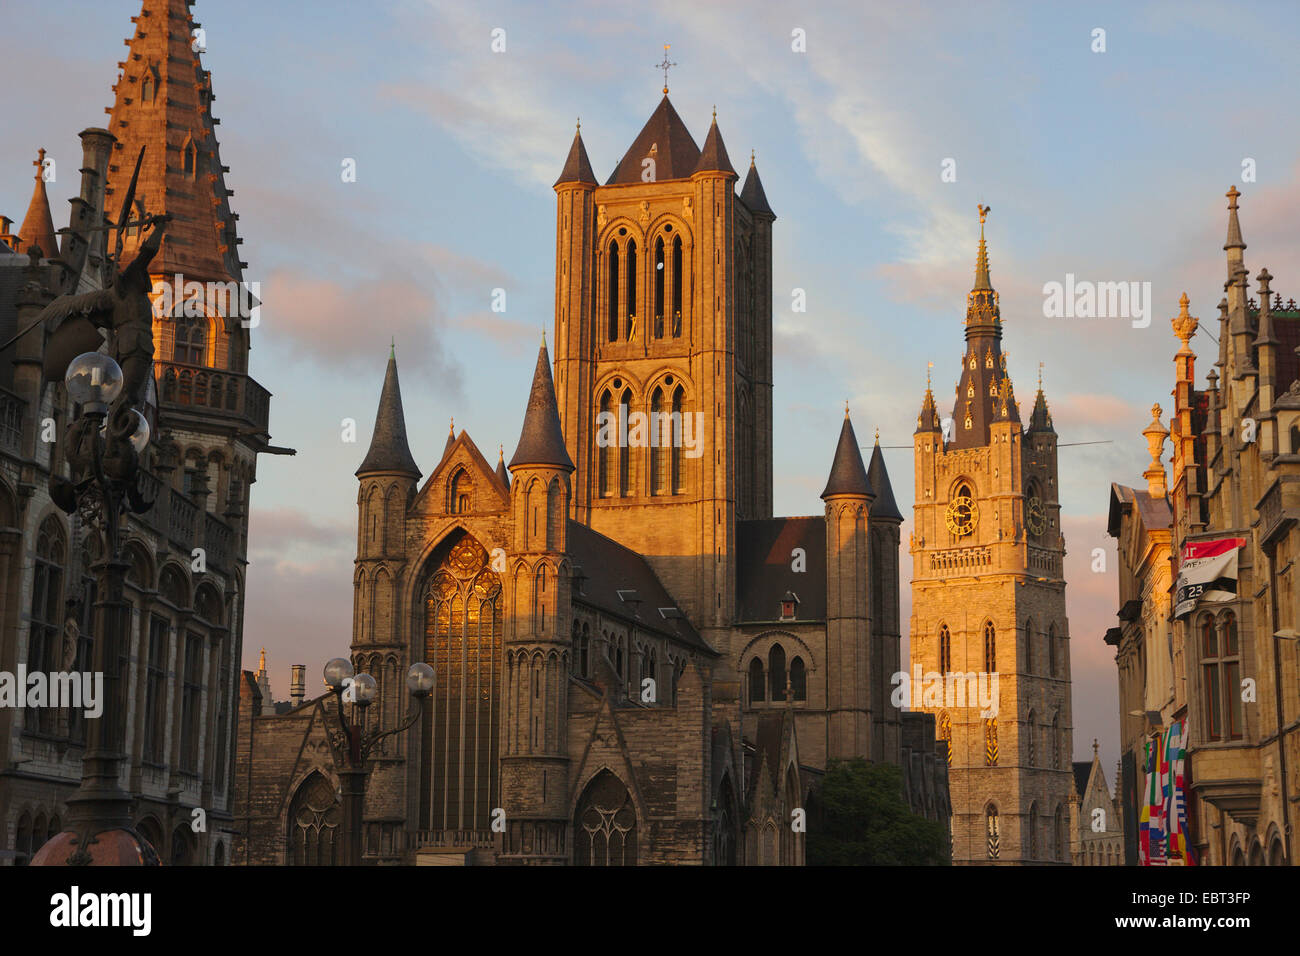 Saint Nicholas' Church and belfry in the evening, Belgium, Gent Stock Photo